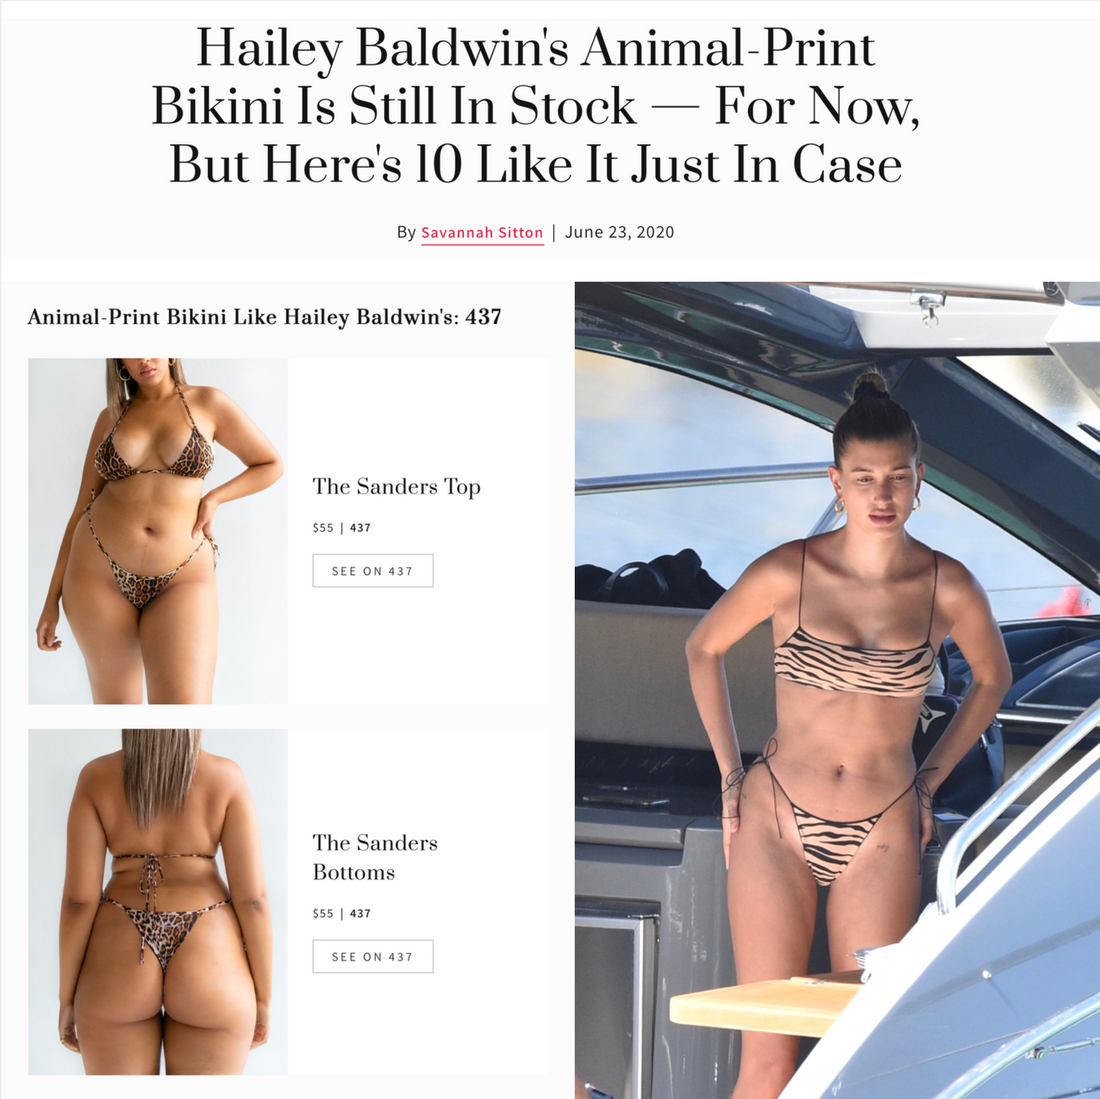 Hailey Baldwin's Animal-Print Bikini Is Still In Stock - For Now